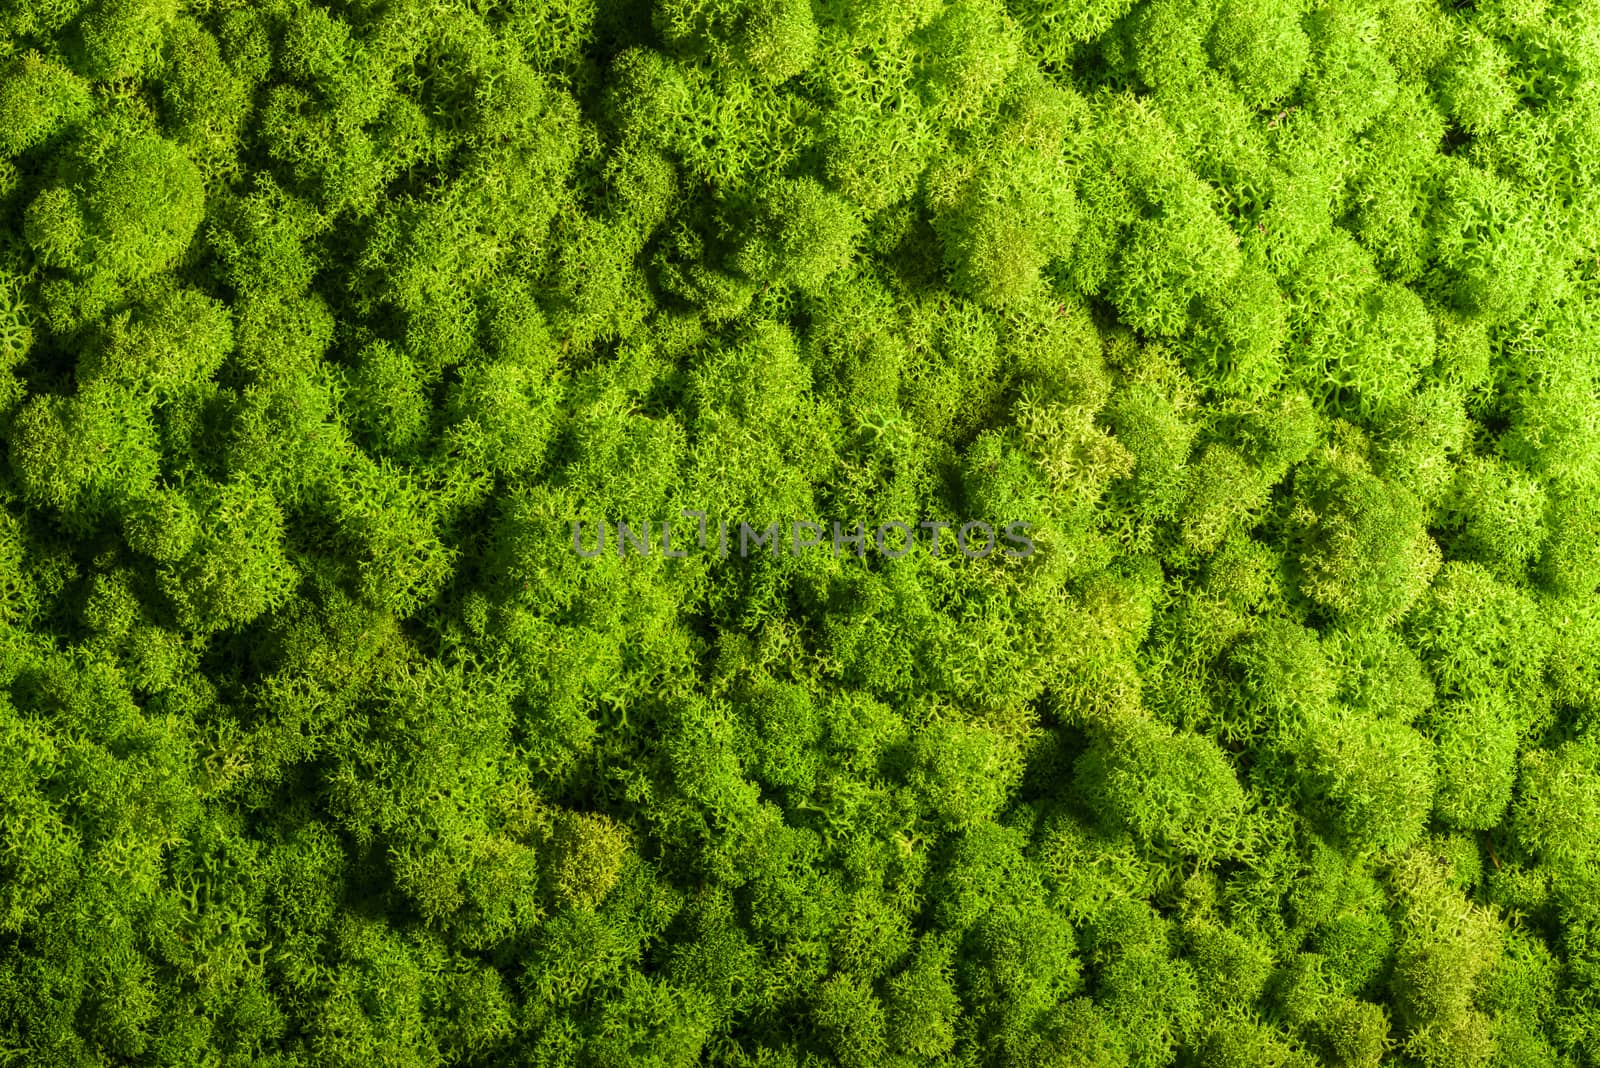 Reindeer moss wall, green wall decoration, lichen Cladonia rangi by asafaric